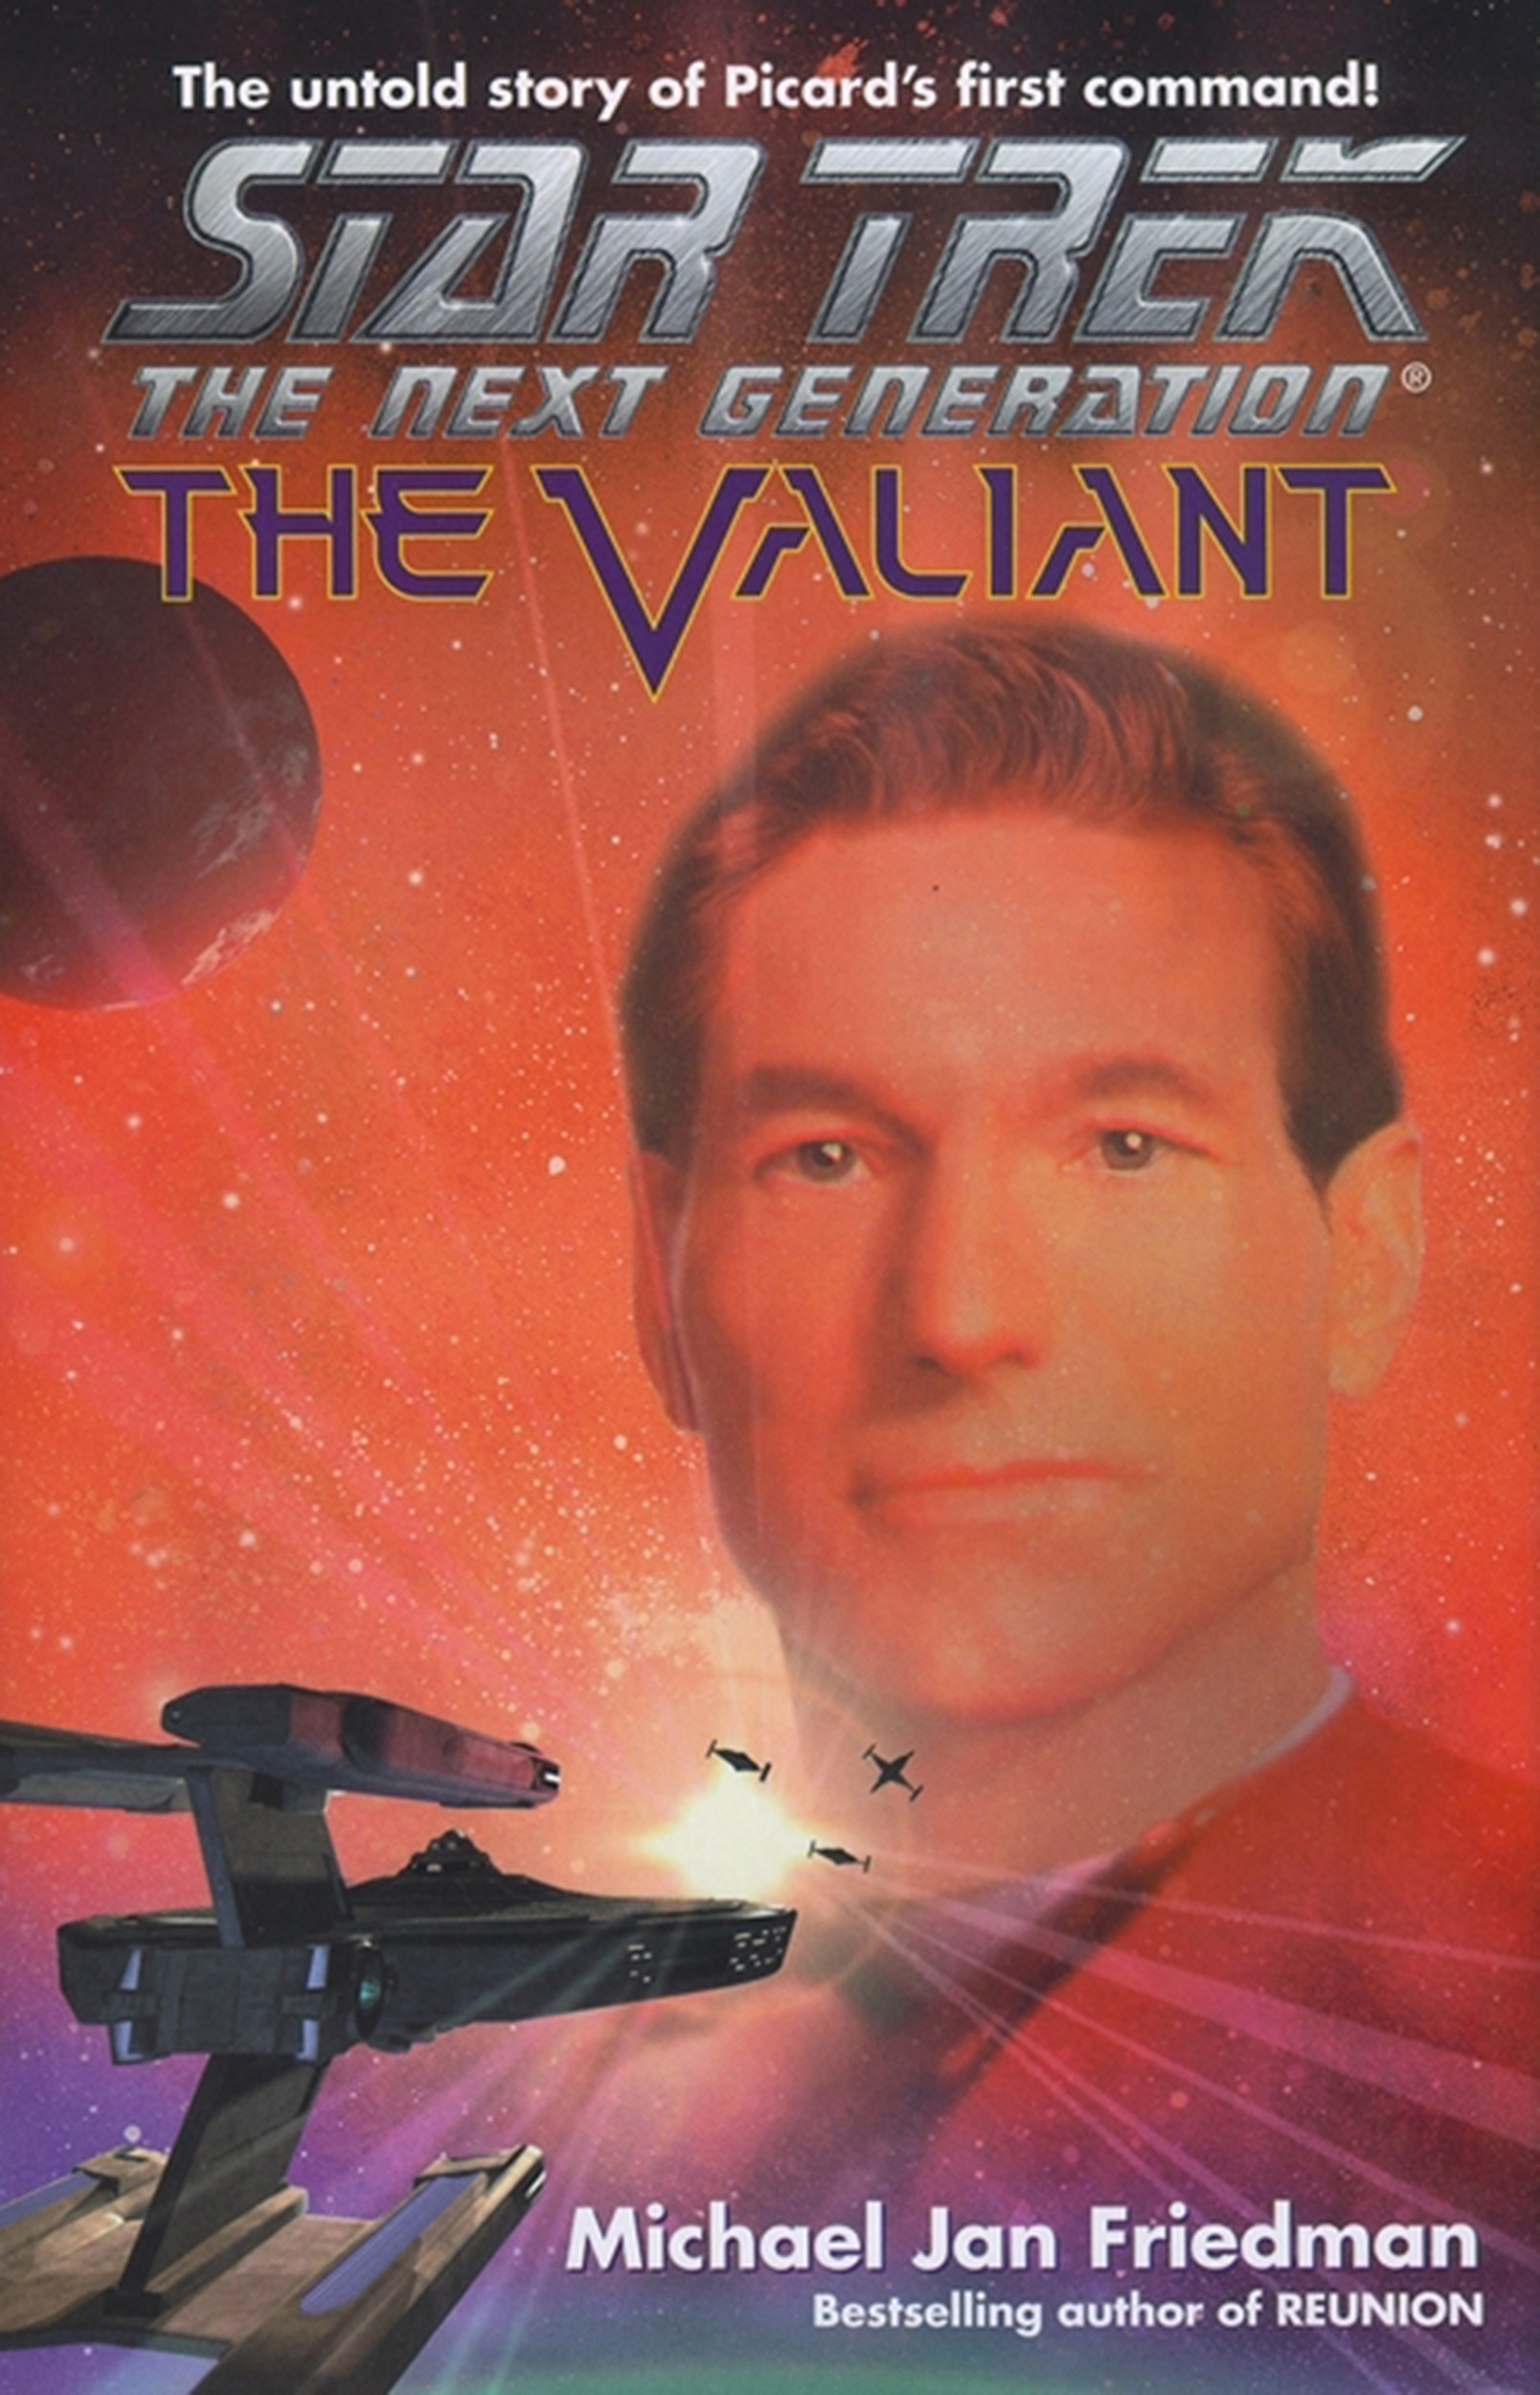 “Star Trek: The Next Generation: The Valiant (Stargazer Prequel)” Review by Blog.trekcore.com